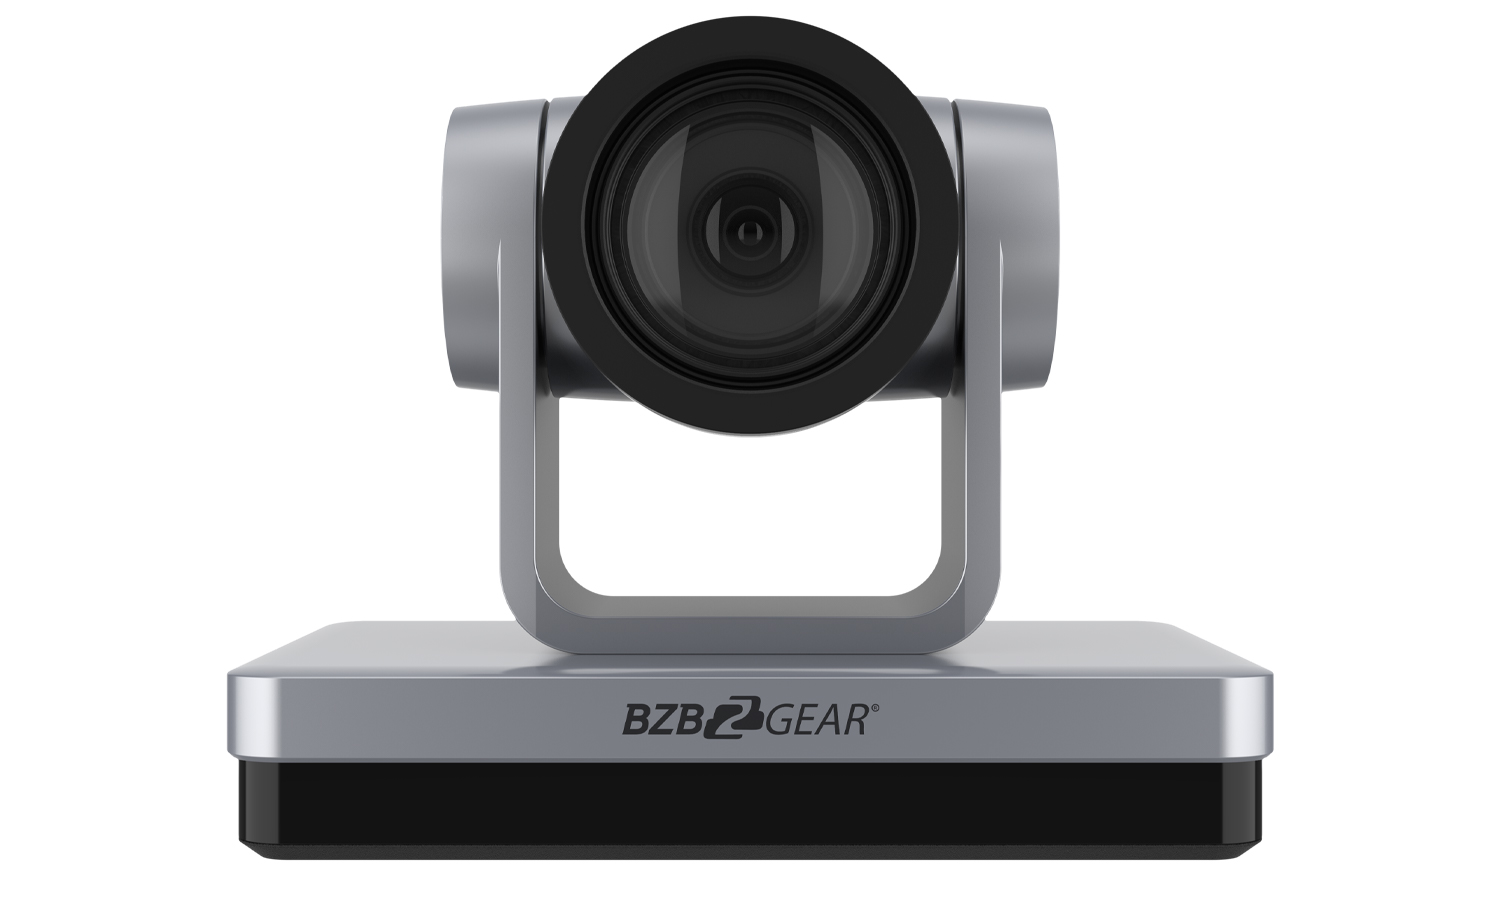 BG-UPTZ-12XHSU-S Universal 1080P FHD PTZ 12X HDMI/SDI/USB 3.0 RS232/485 Live Streaming Camera (Silver) by BZBGEAR